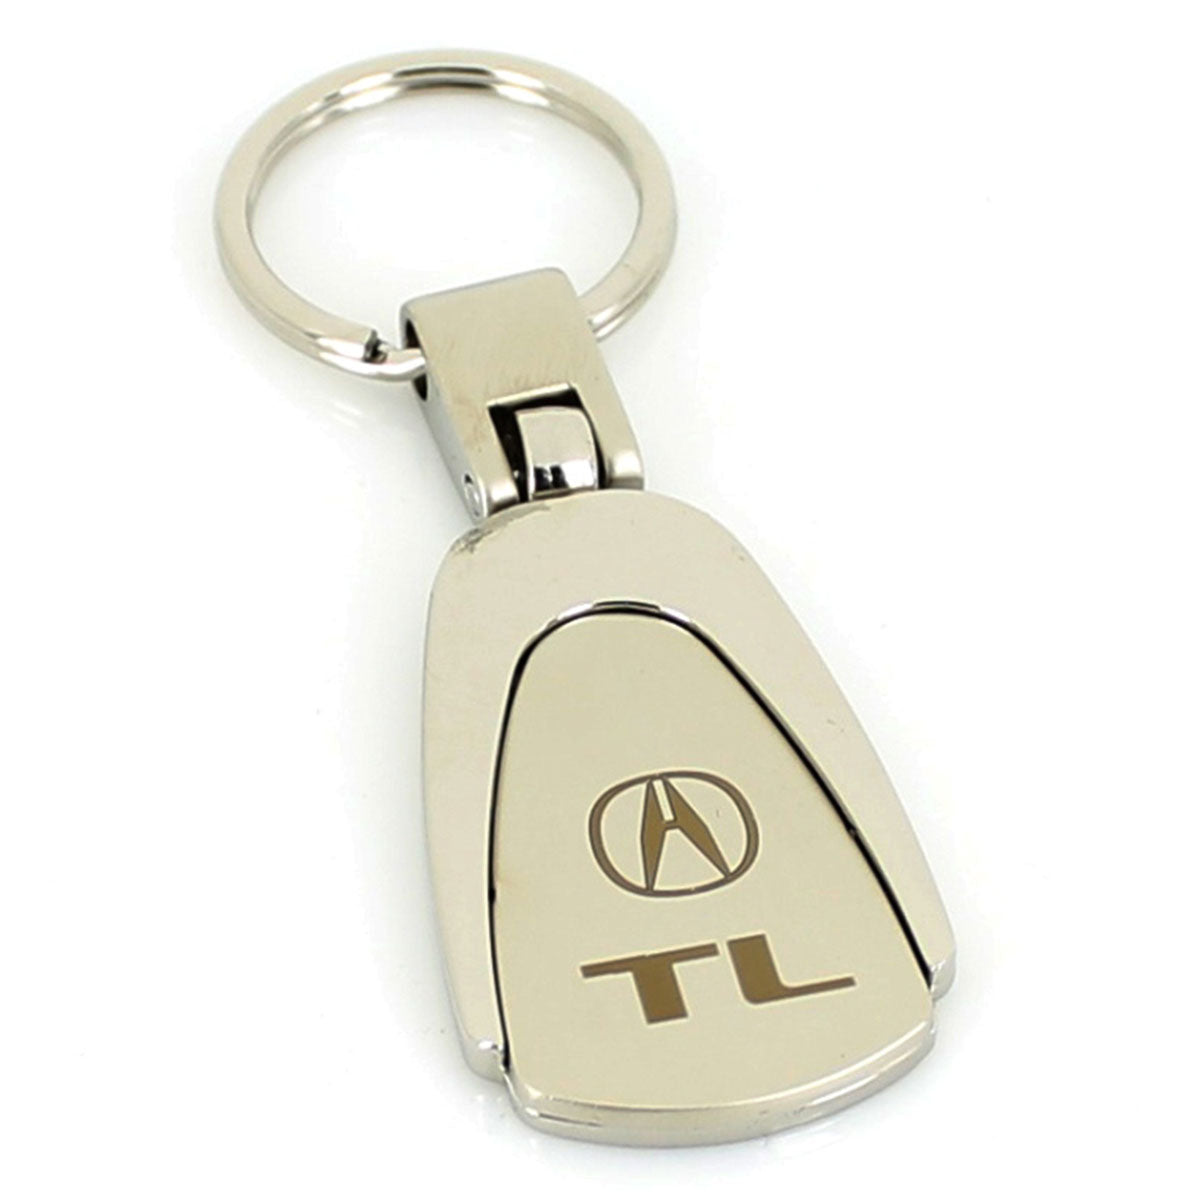 Acura TL Key Chain